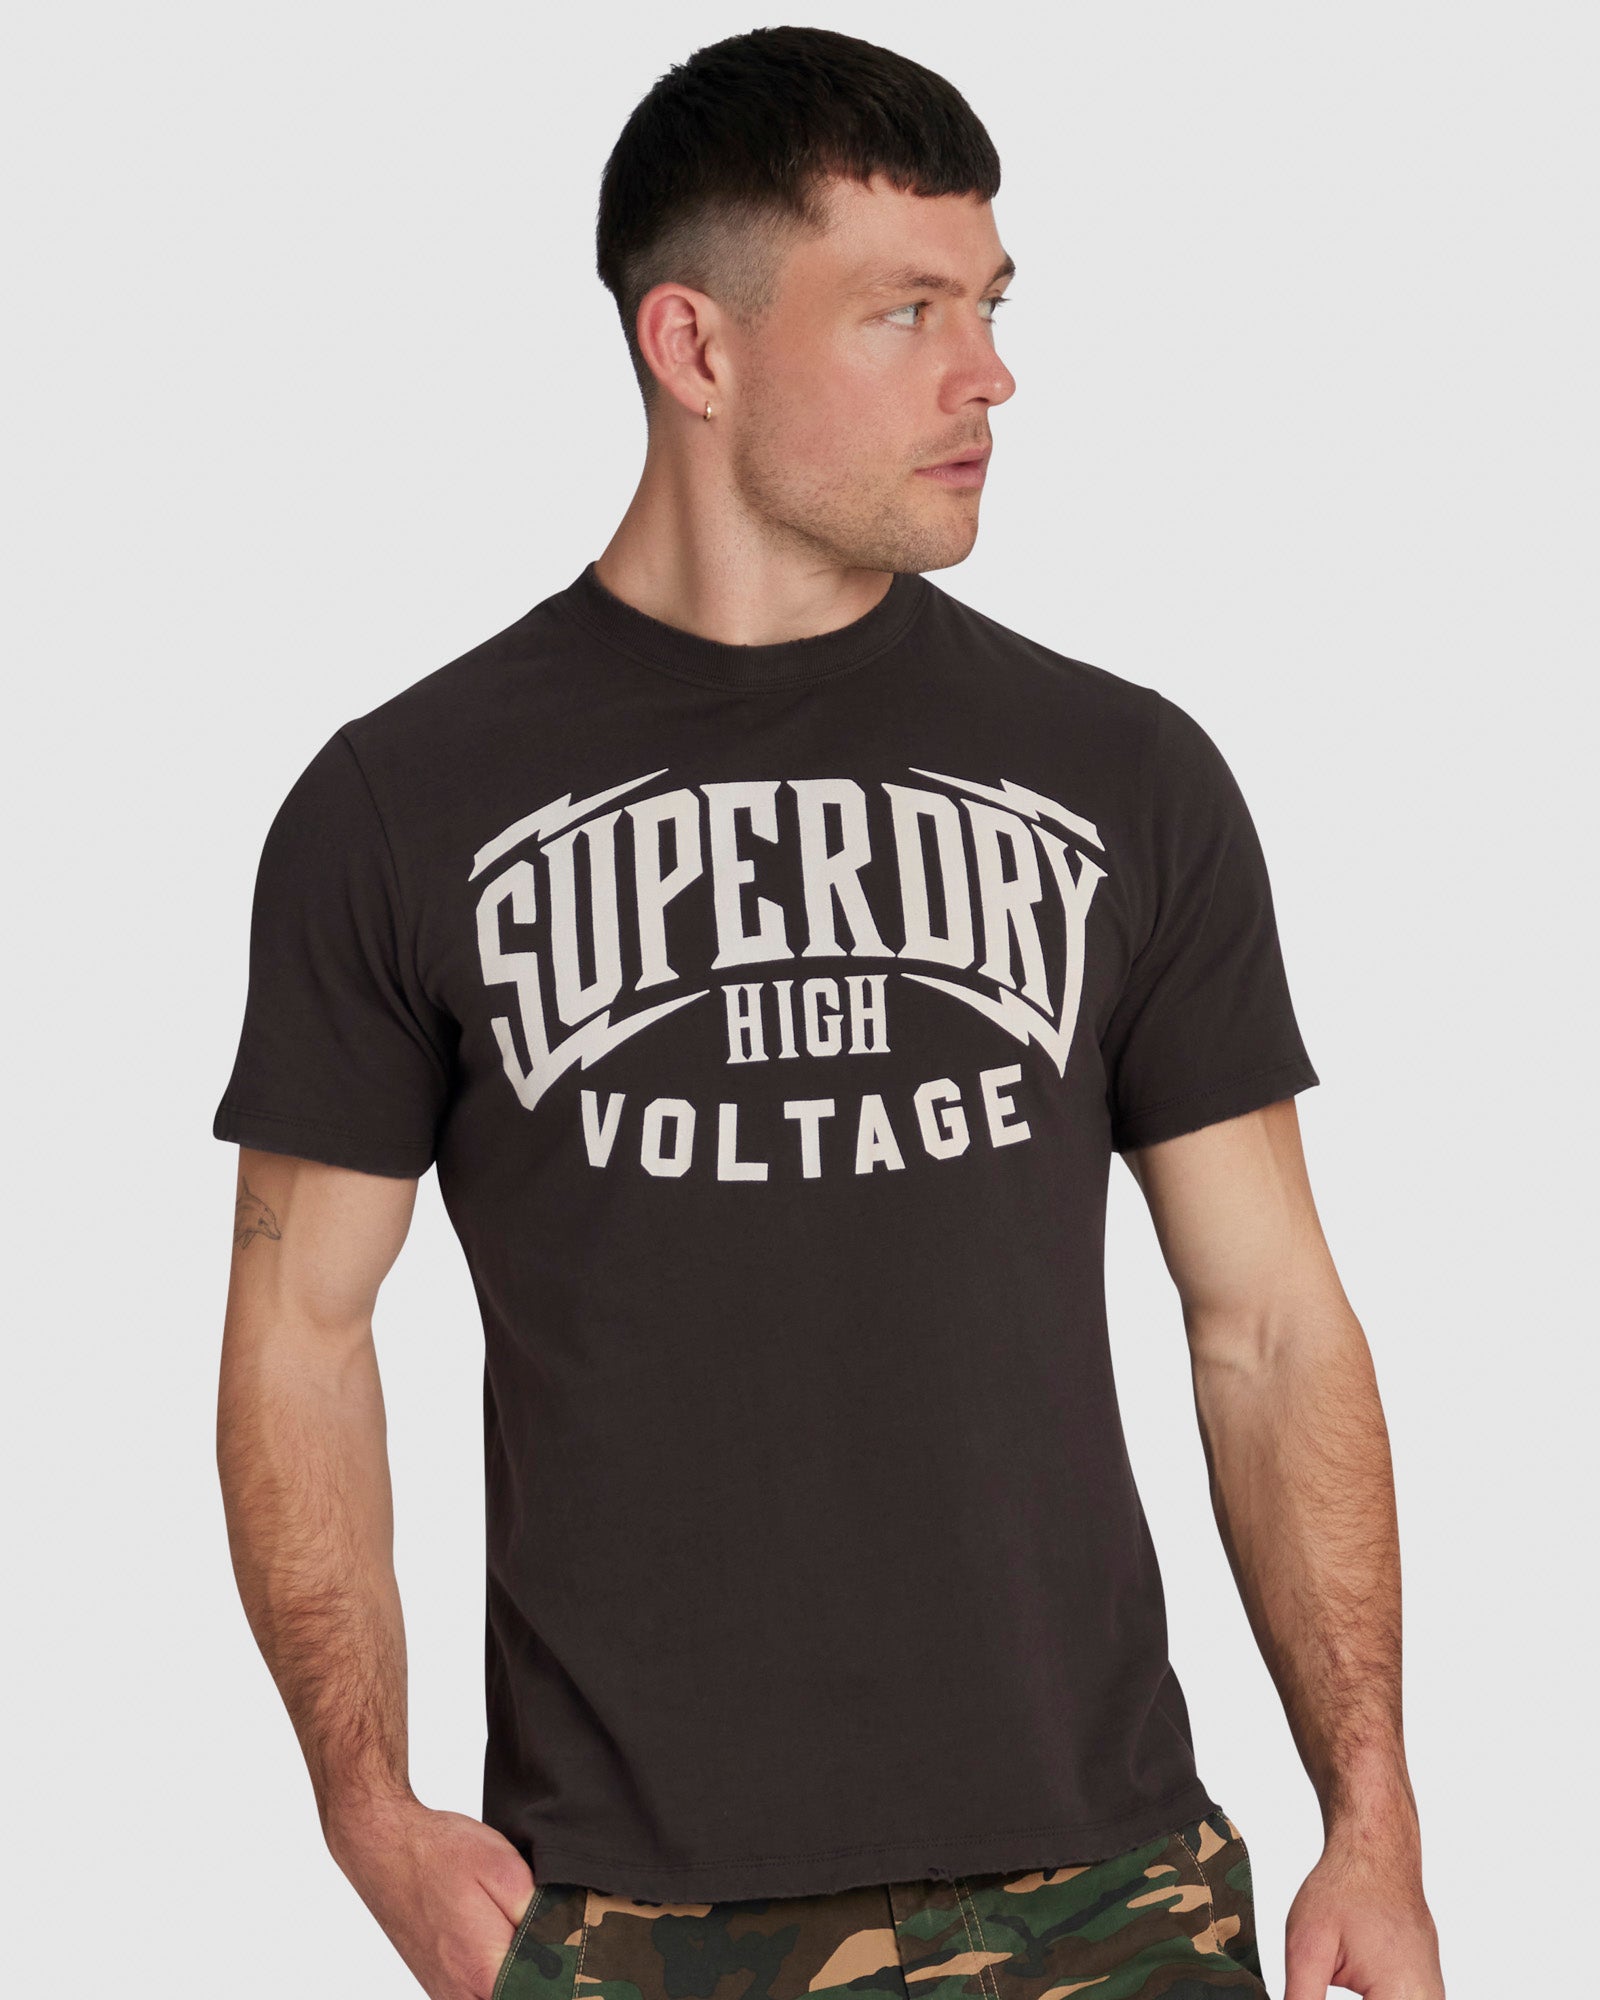 Retro Rock Graphic T Shirt | Carbon Grey